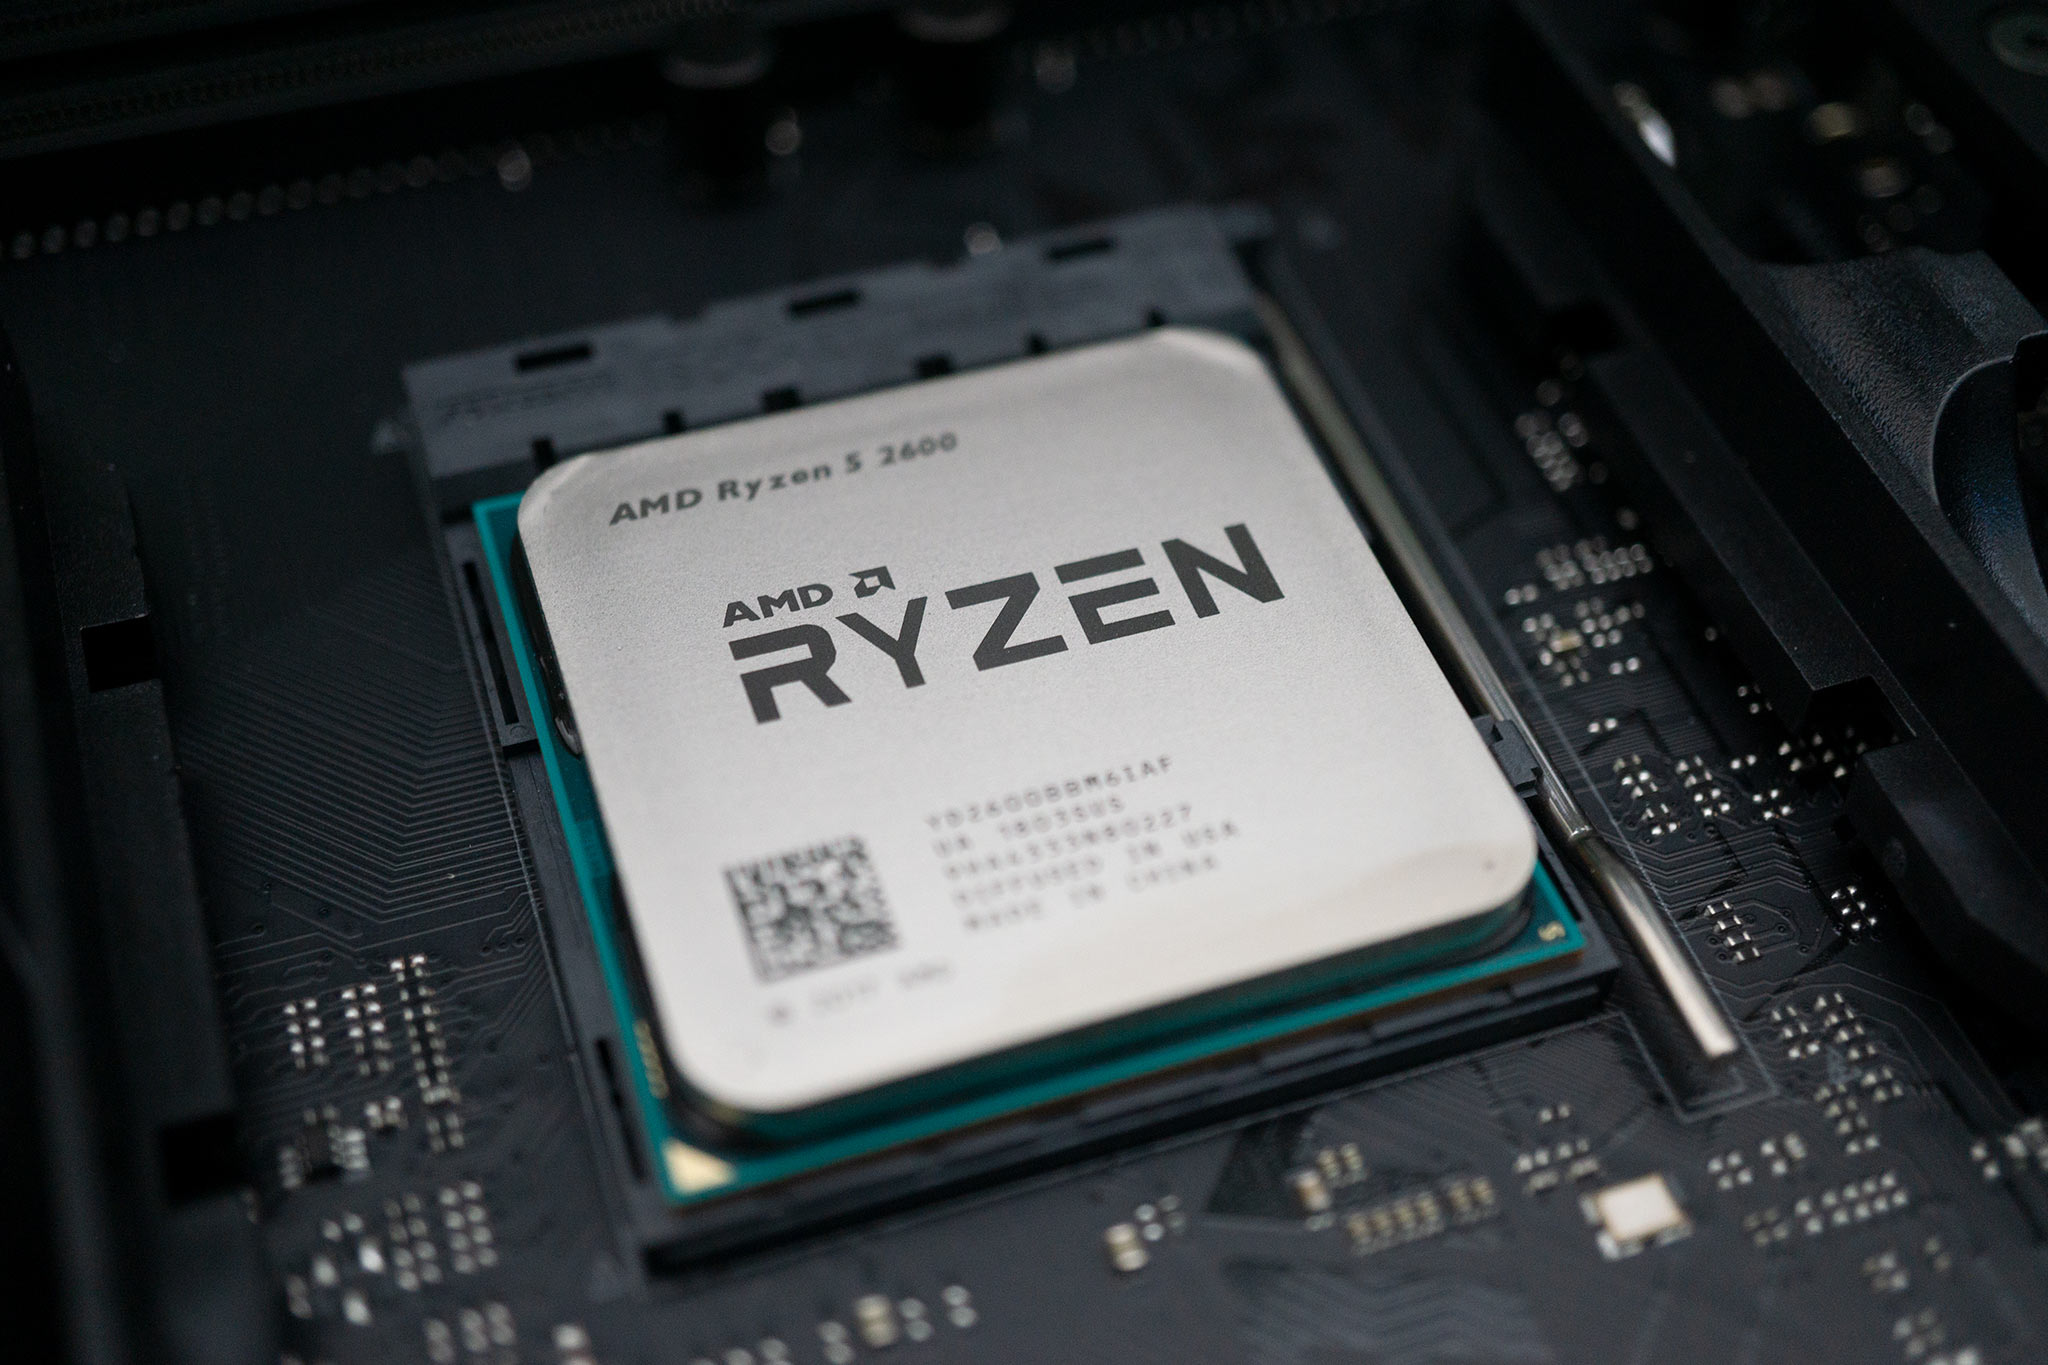 Райзен какой сокет. Процессор AMD 5 2600. Процессор AMD Ryzen 5. Ryzen 5 1600af. Процессор райзен 5 2600.